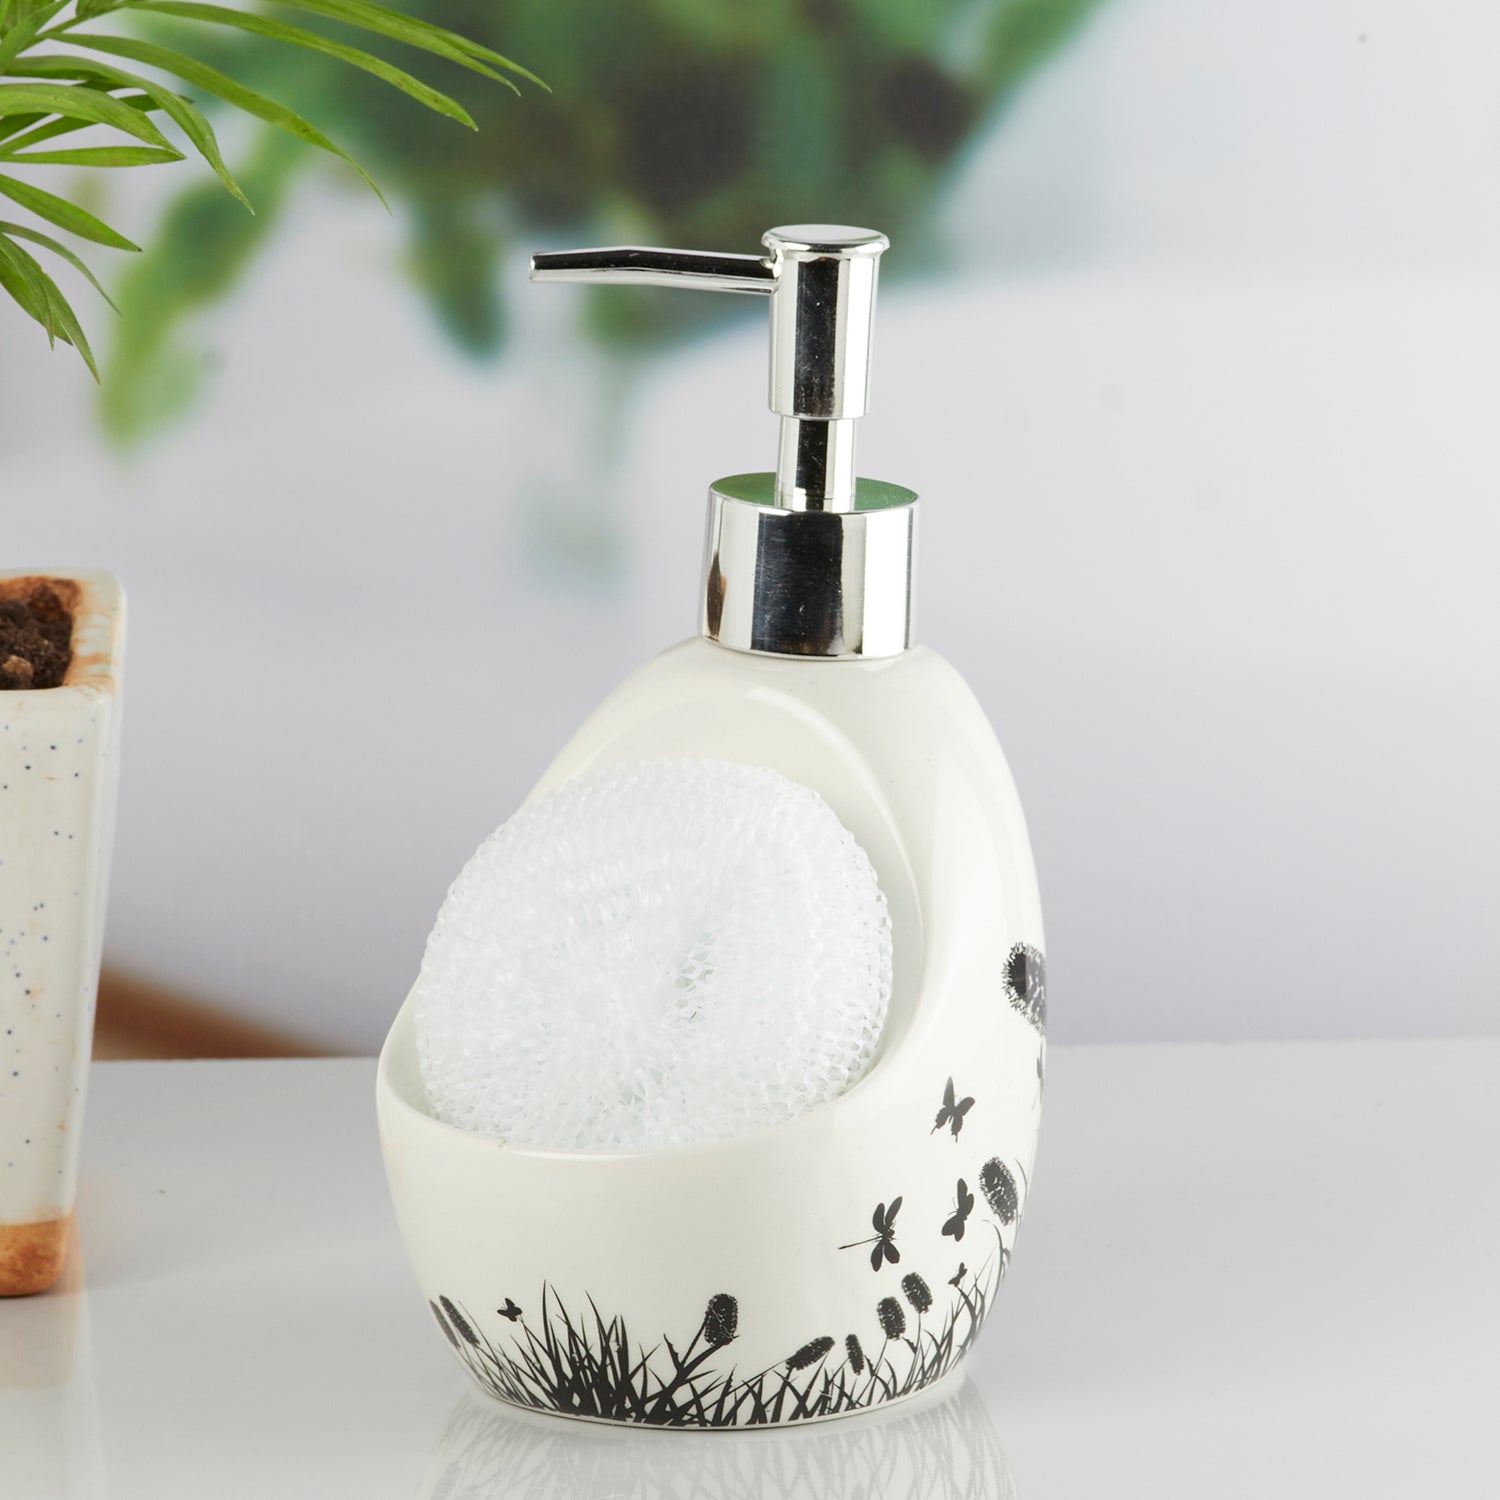 Ceramic Soap Dispenser handwash Pump for Bathroom, Set of 1, White/Black (10302)